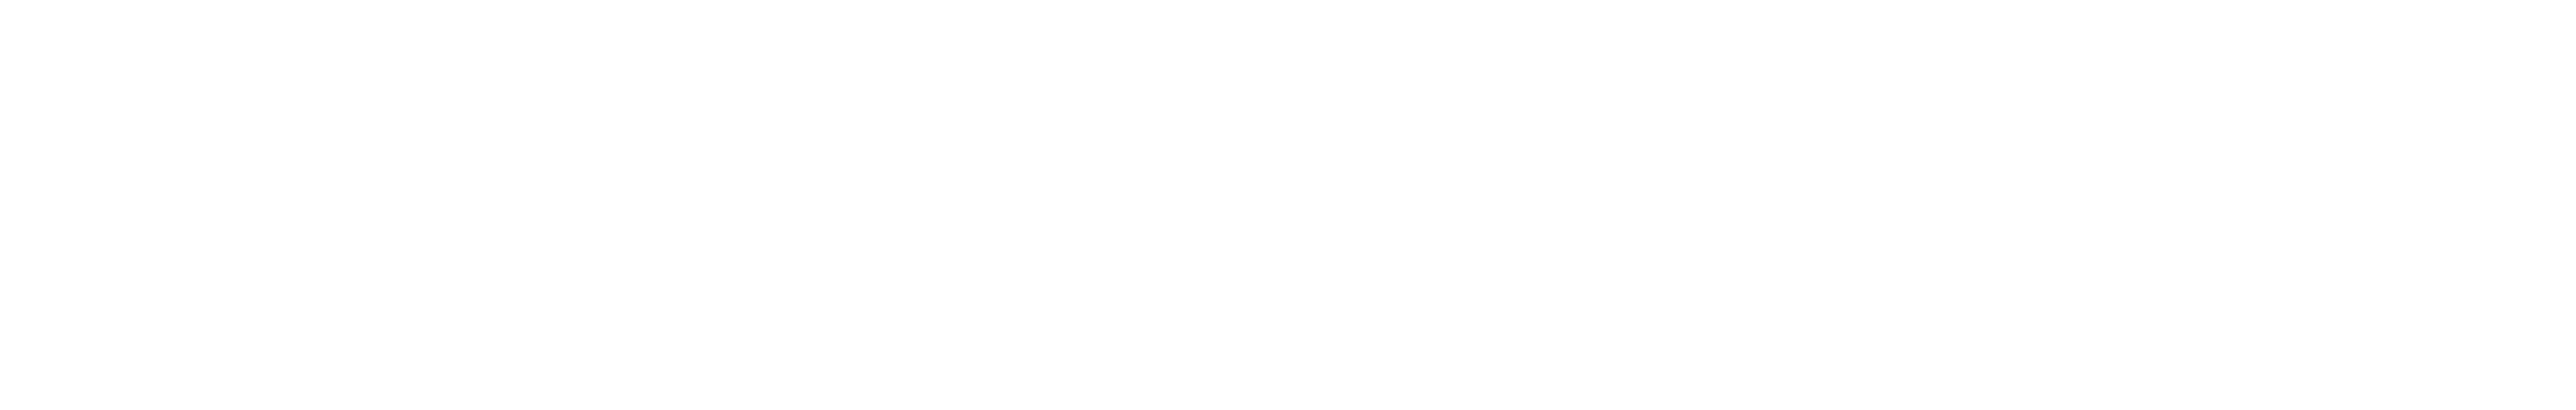 Make Room At Home